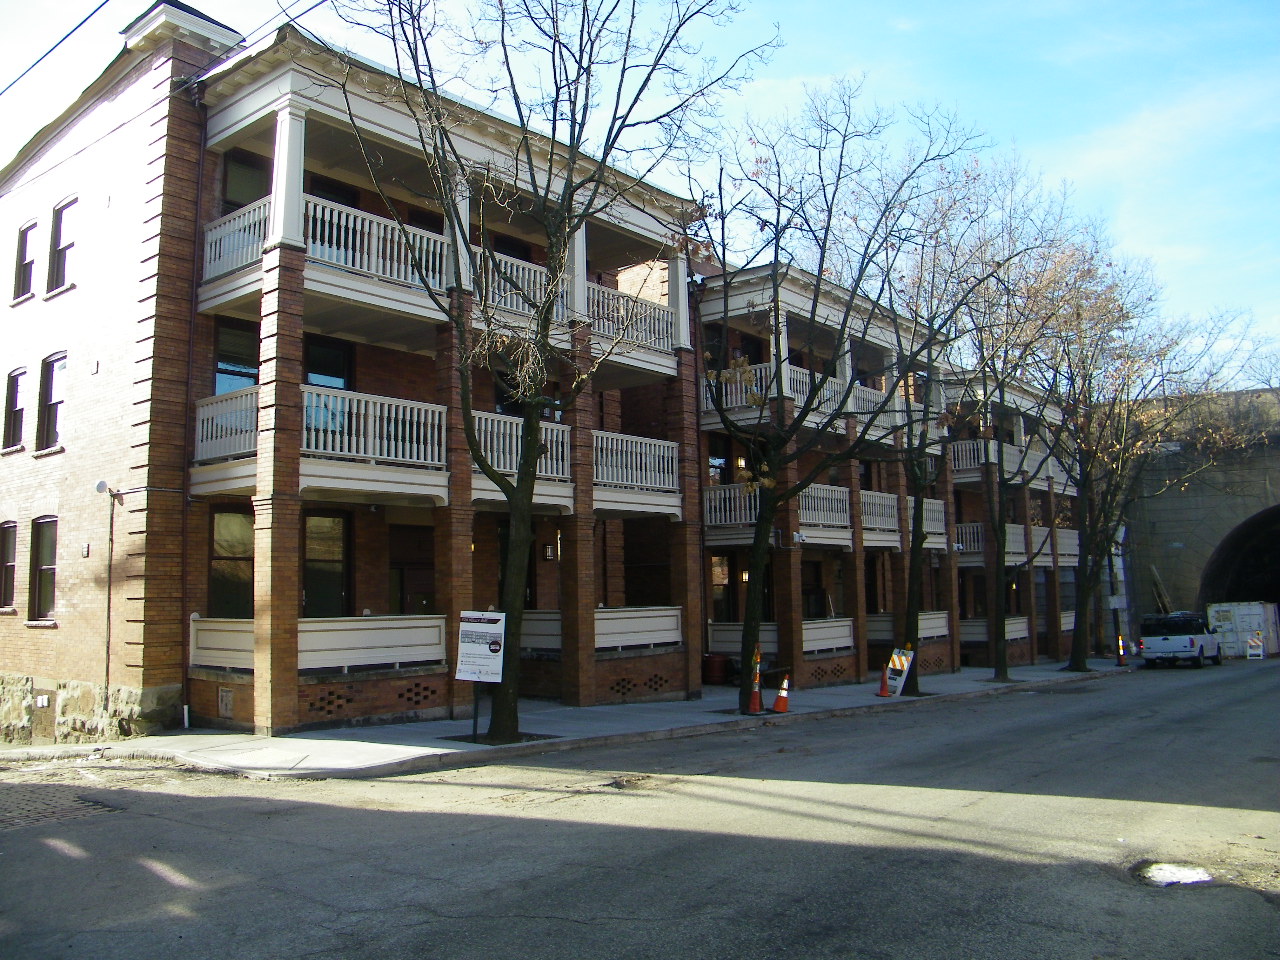 Falconhurst Apartments Exterior After